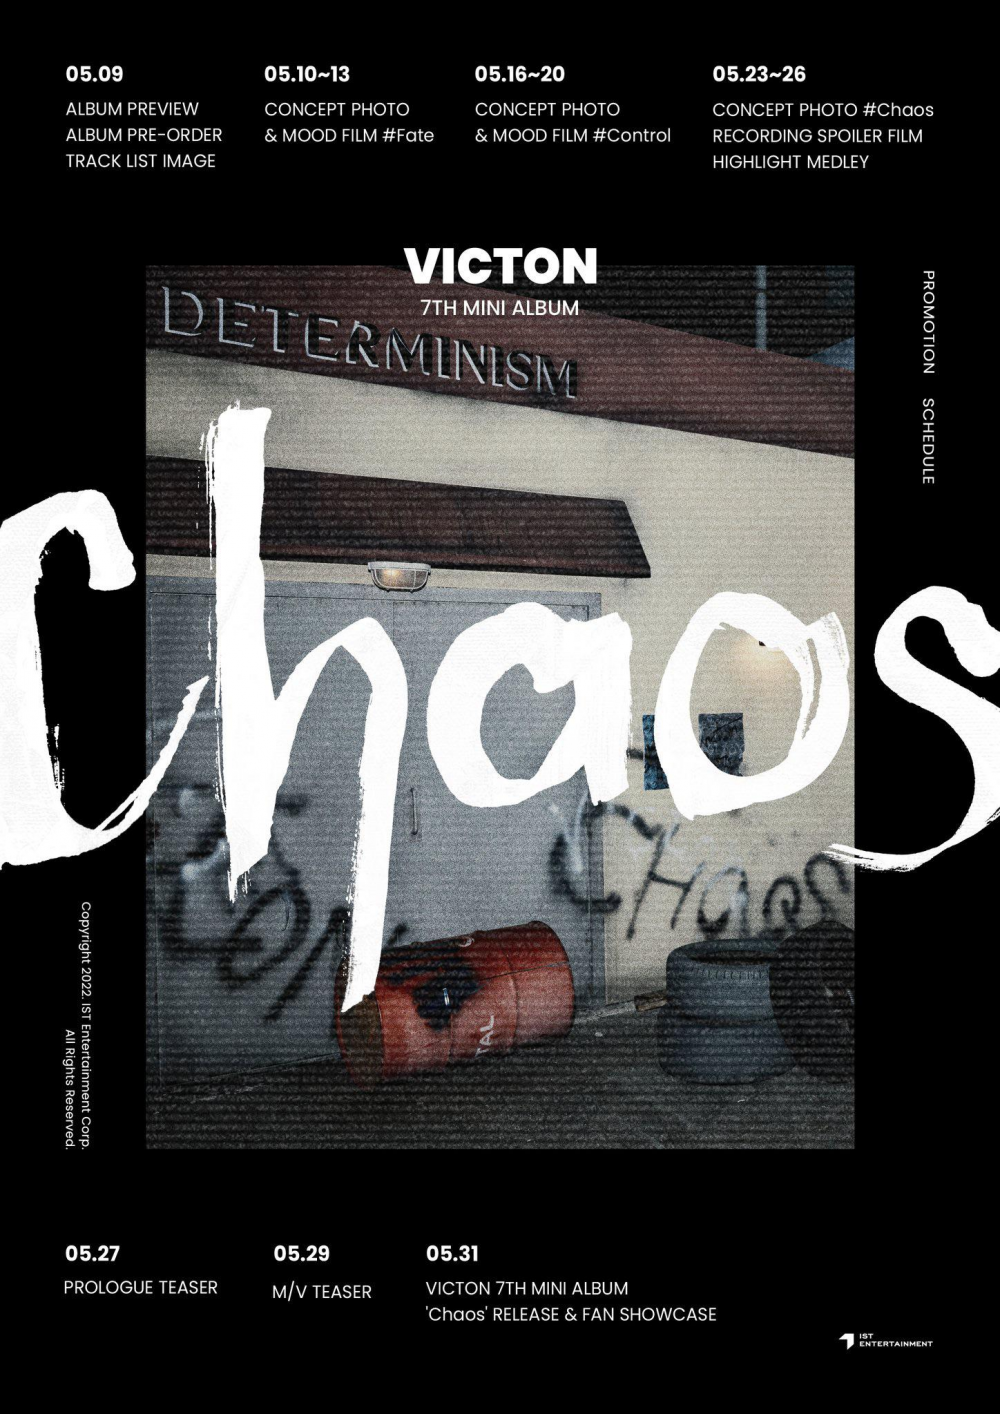 [Камбэк] VICTON мини-альбом «Chaos»: пролог и тизер клипа